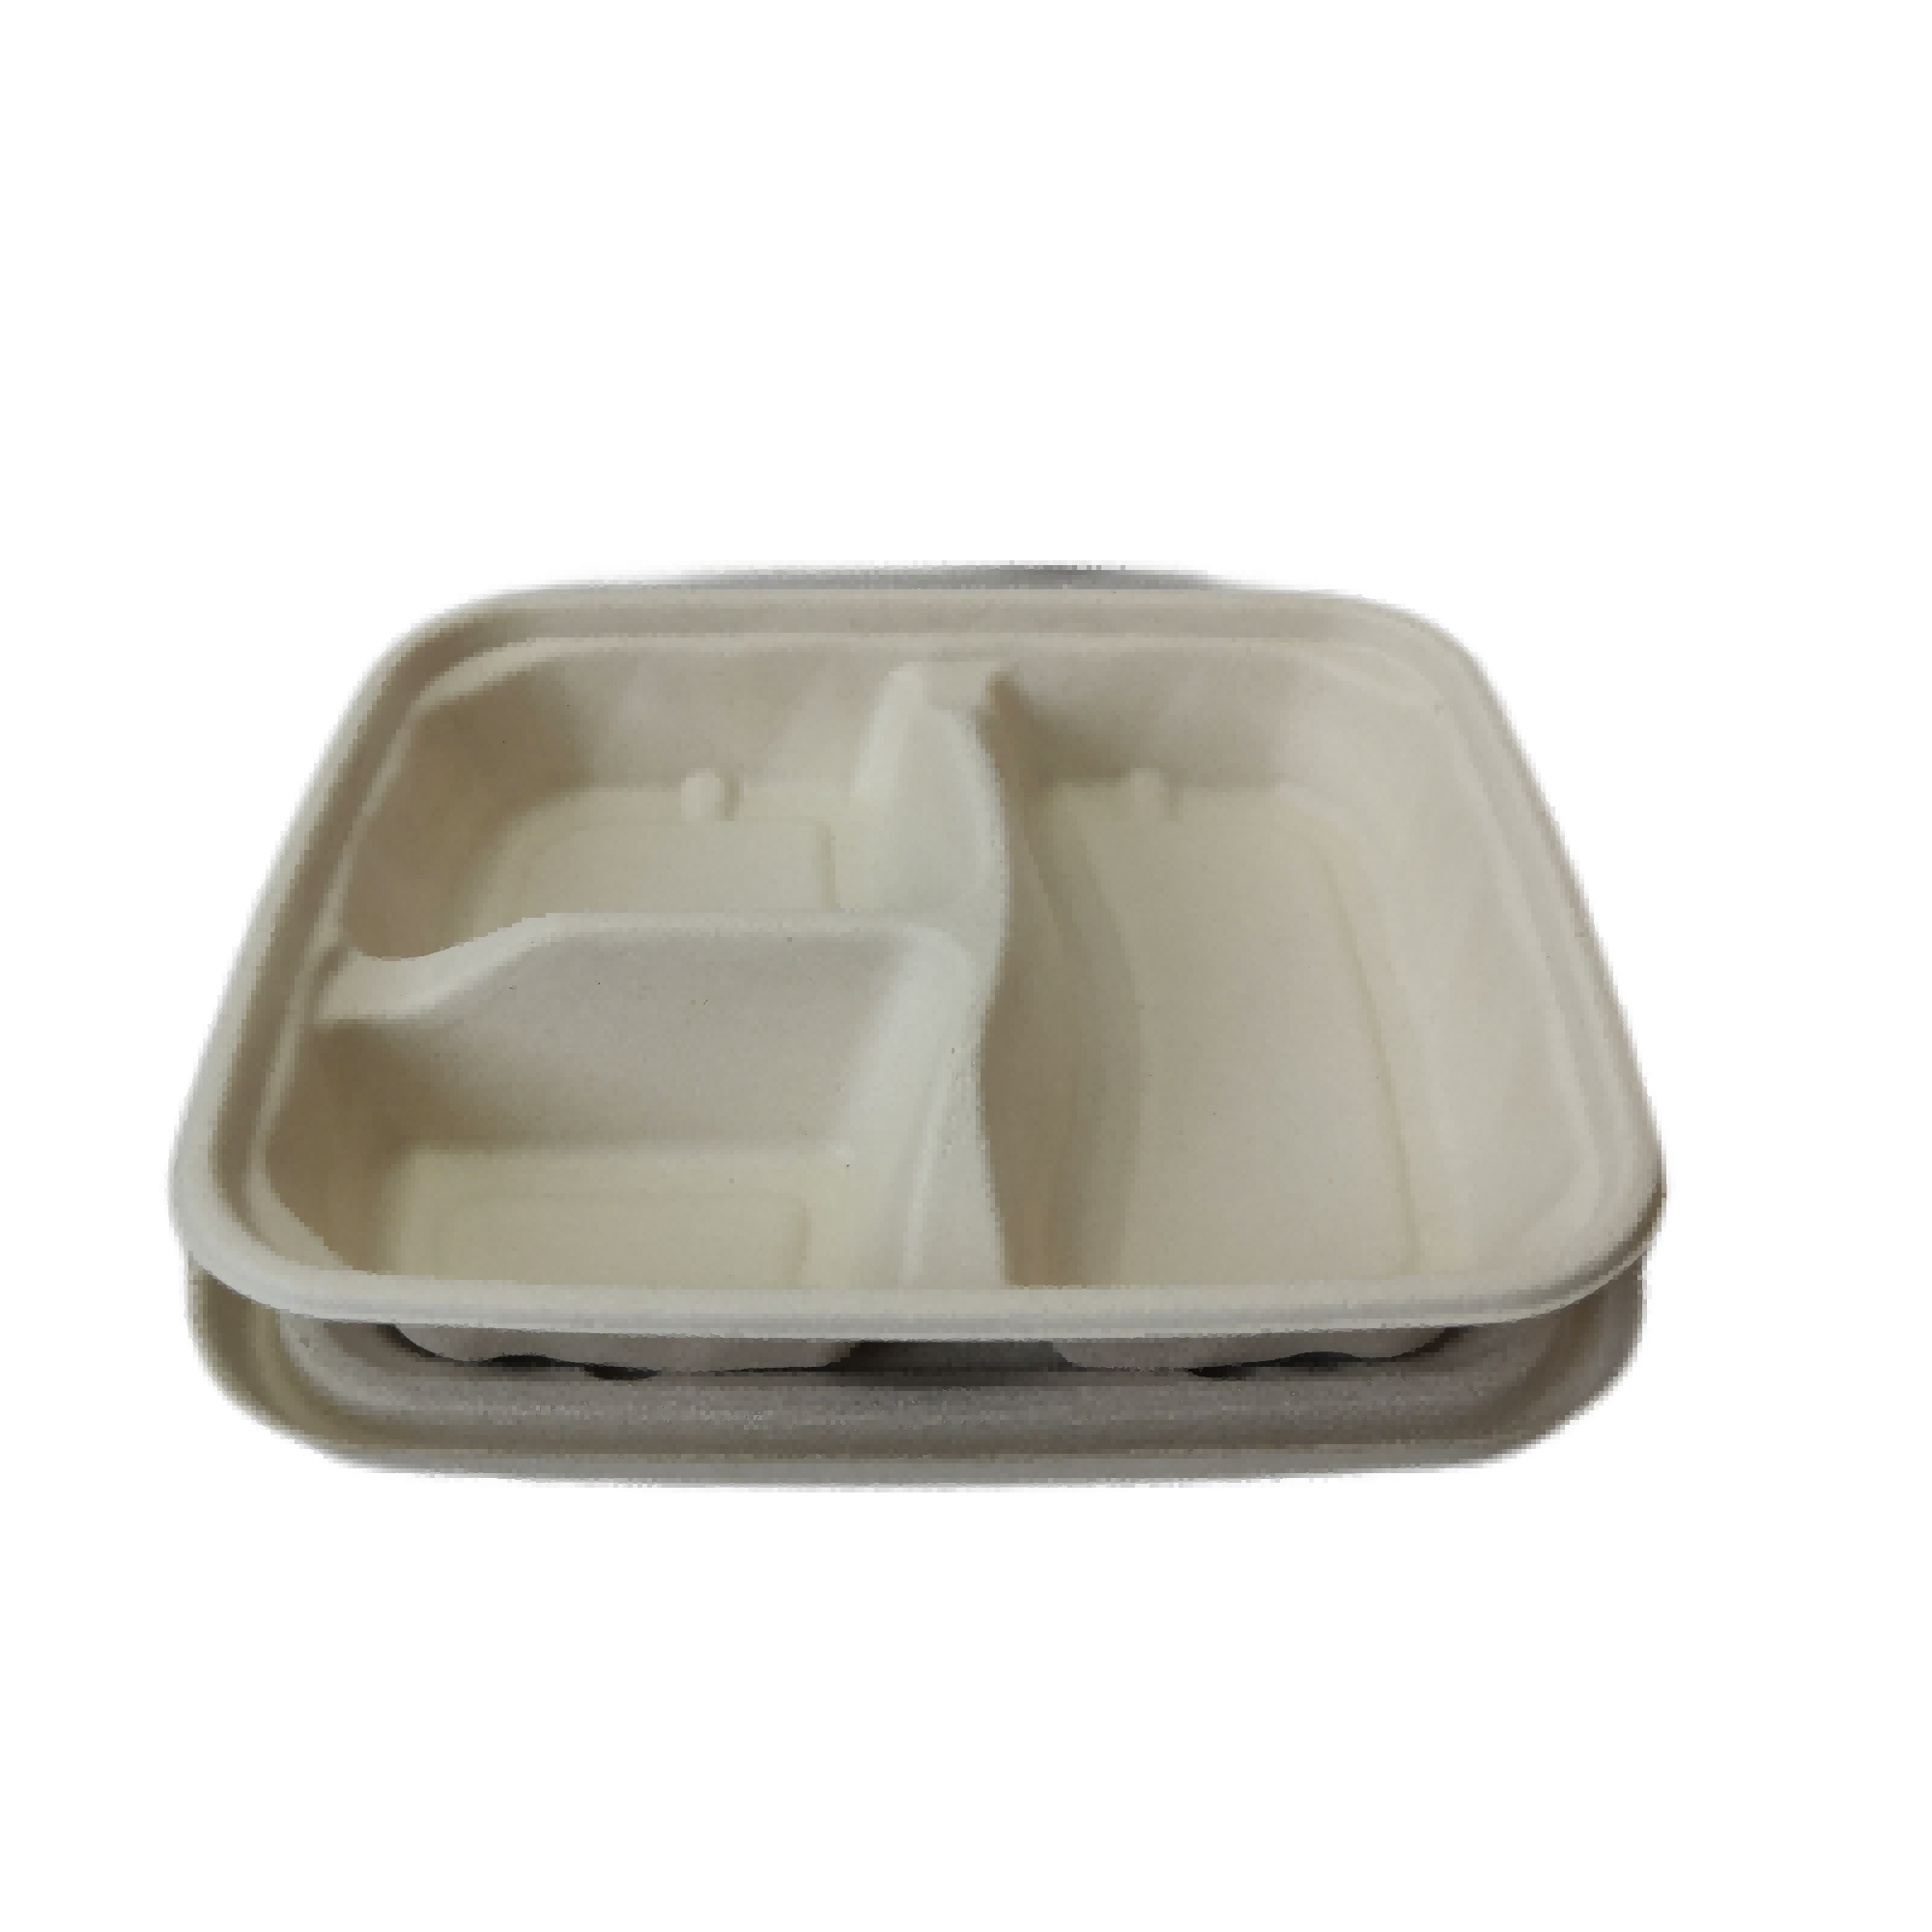 Kaufen Einweg-Bagass-Lunchbox;Einweg-Bagass-Lunchbox Preis;Einweg-Bagass-Lunchbox Marken;Einweg-Bagass-Lunchbox Hersteller;Einweg-Bagass-Lunchbox Zitat;Einweg-Bagass-Lunchbox Unternehmen